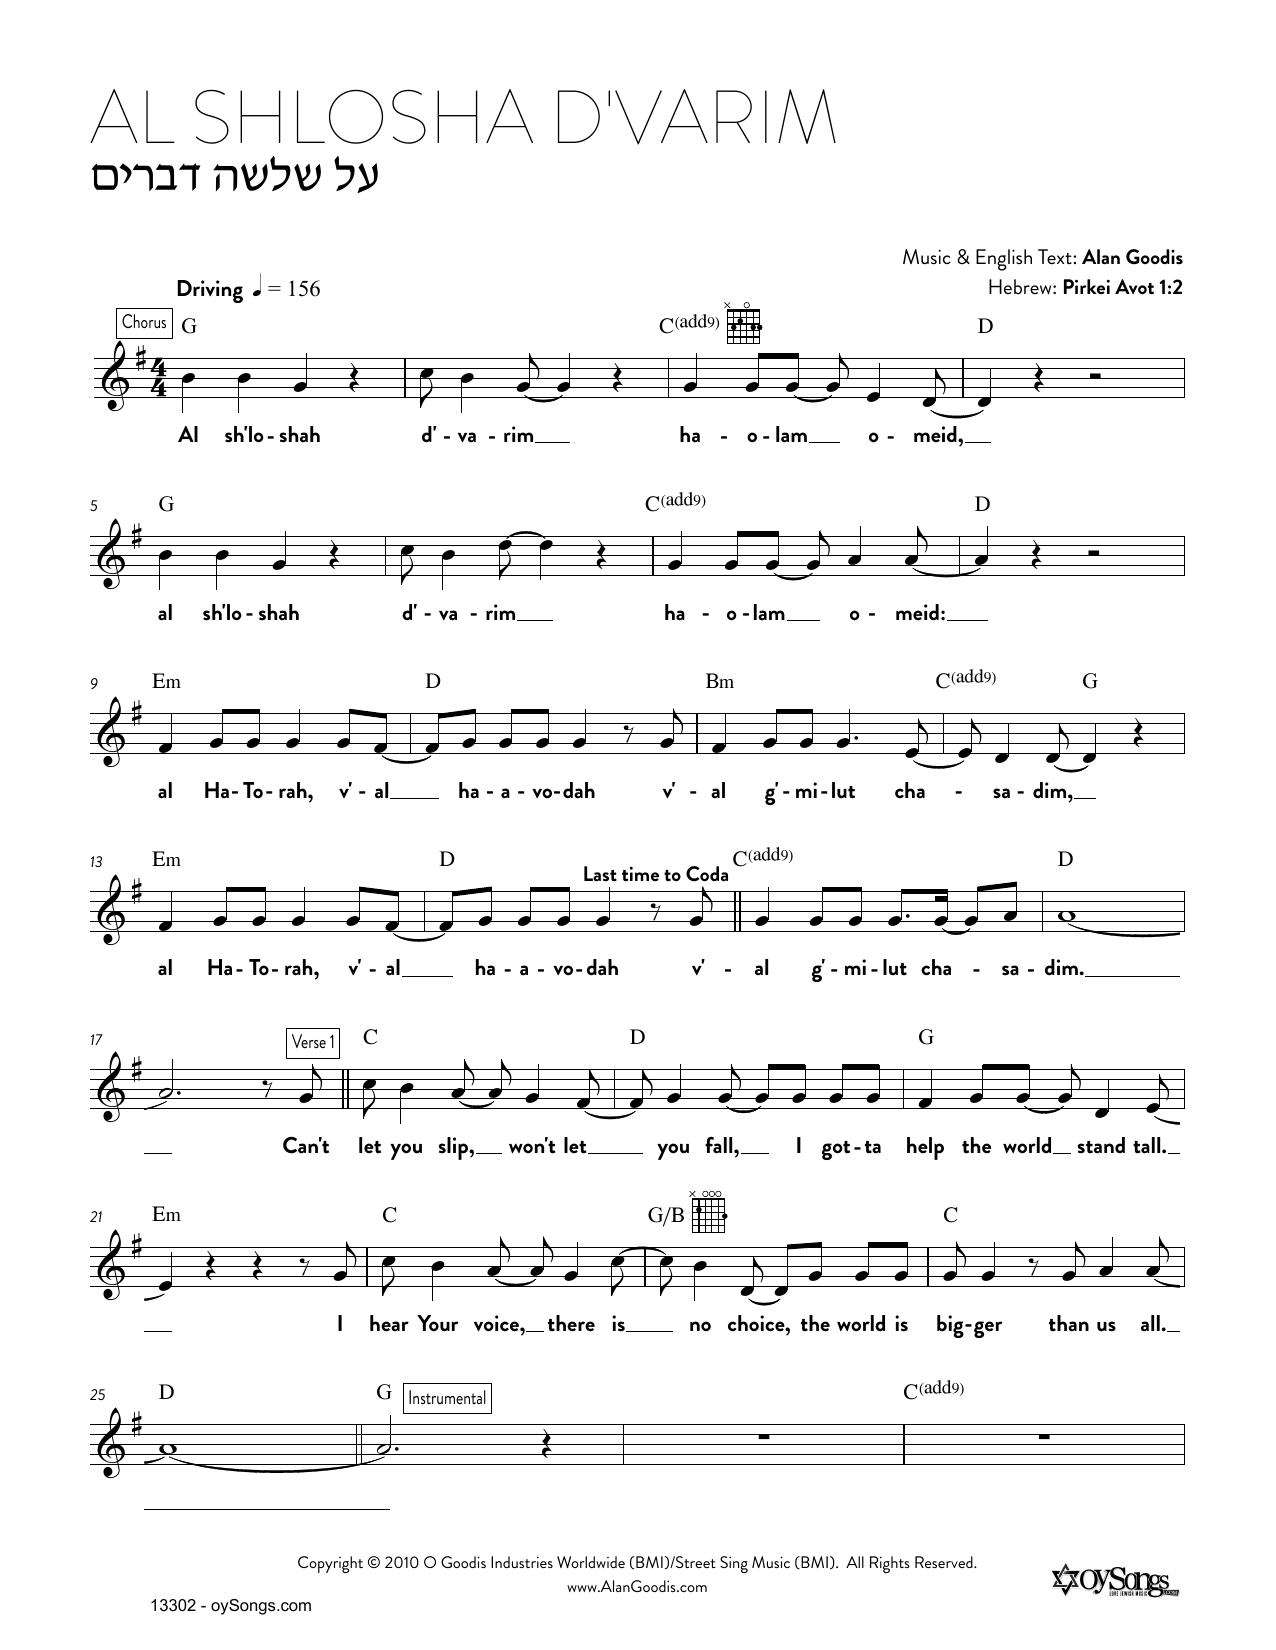 Download Alan Goodis Al Shlosha D'varim Sheet Music and learn how to play Real Book – Melody, Lyrics & Chords PDF digital score in minutes